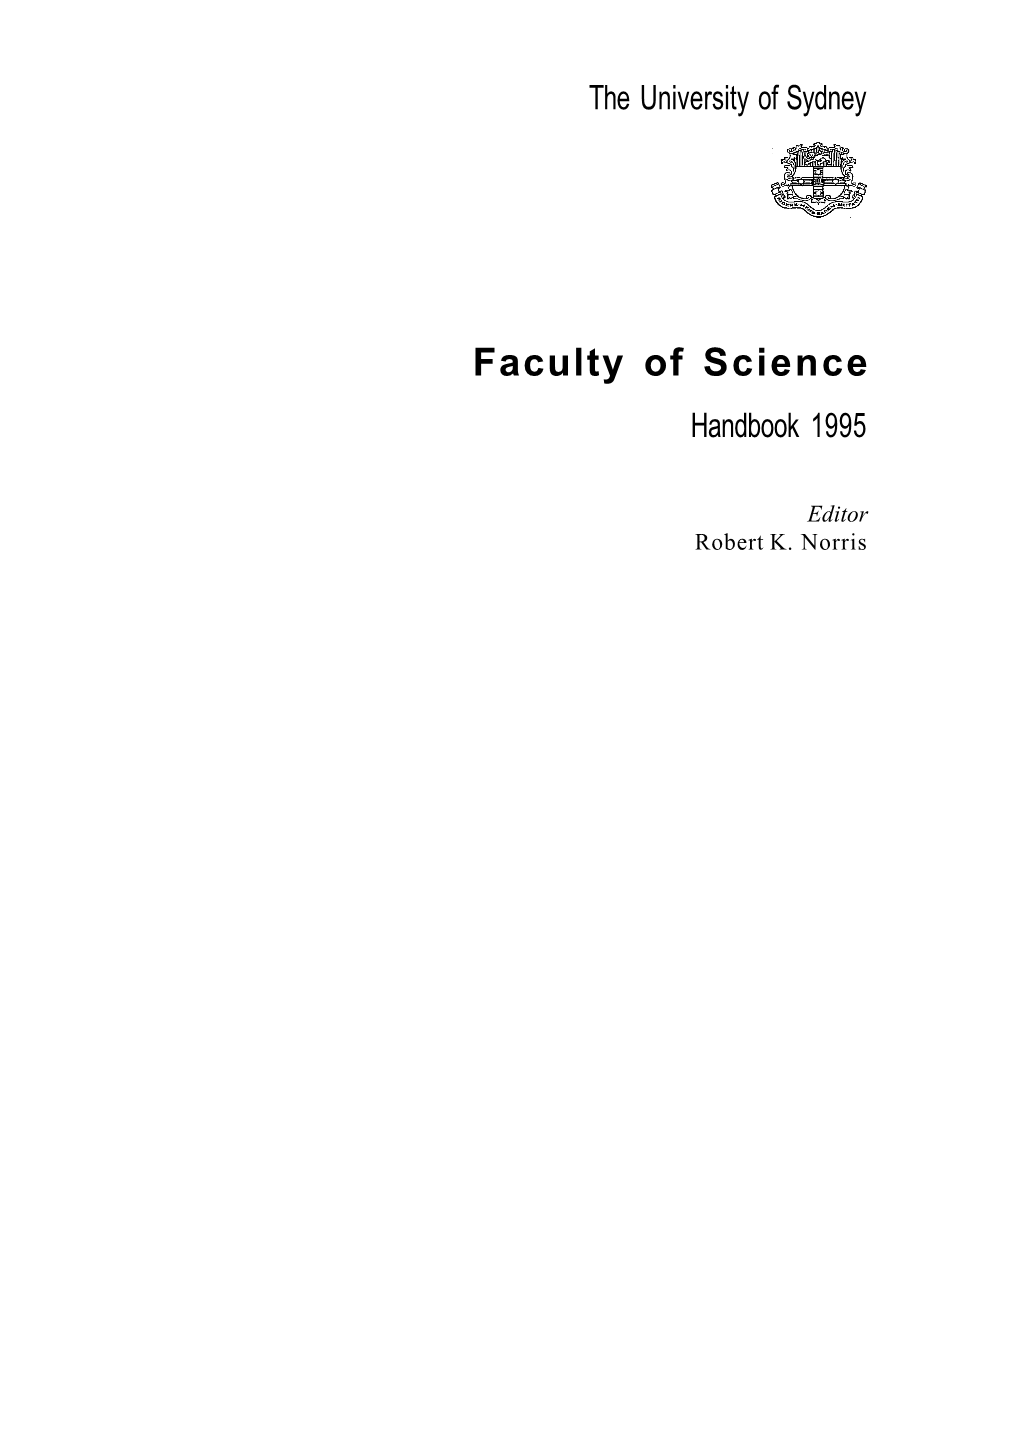 Faculty of Science Handbook 1995